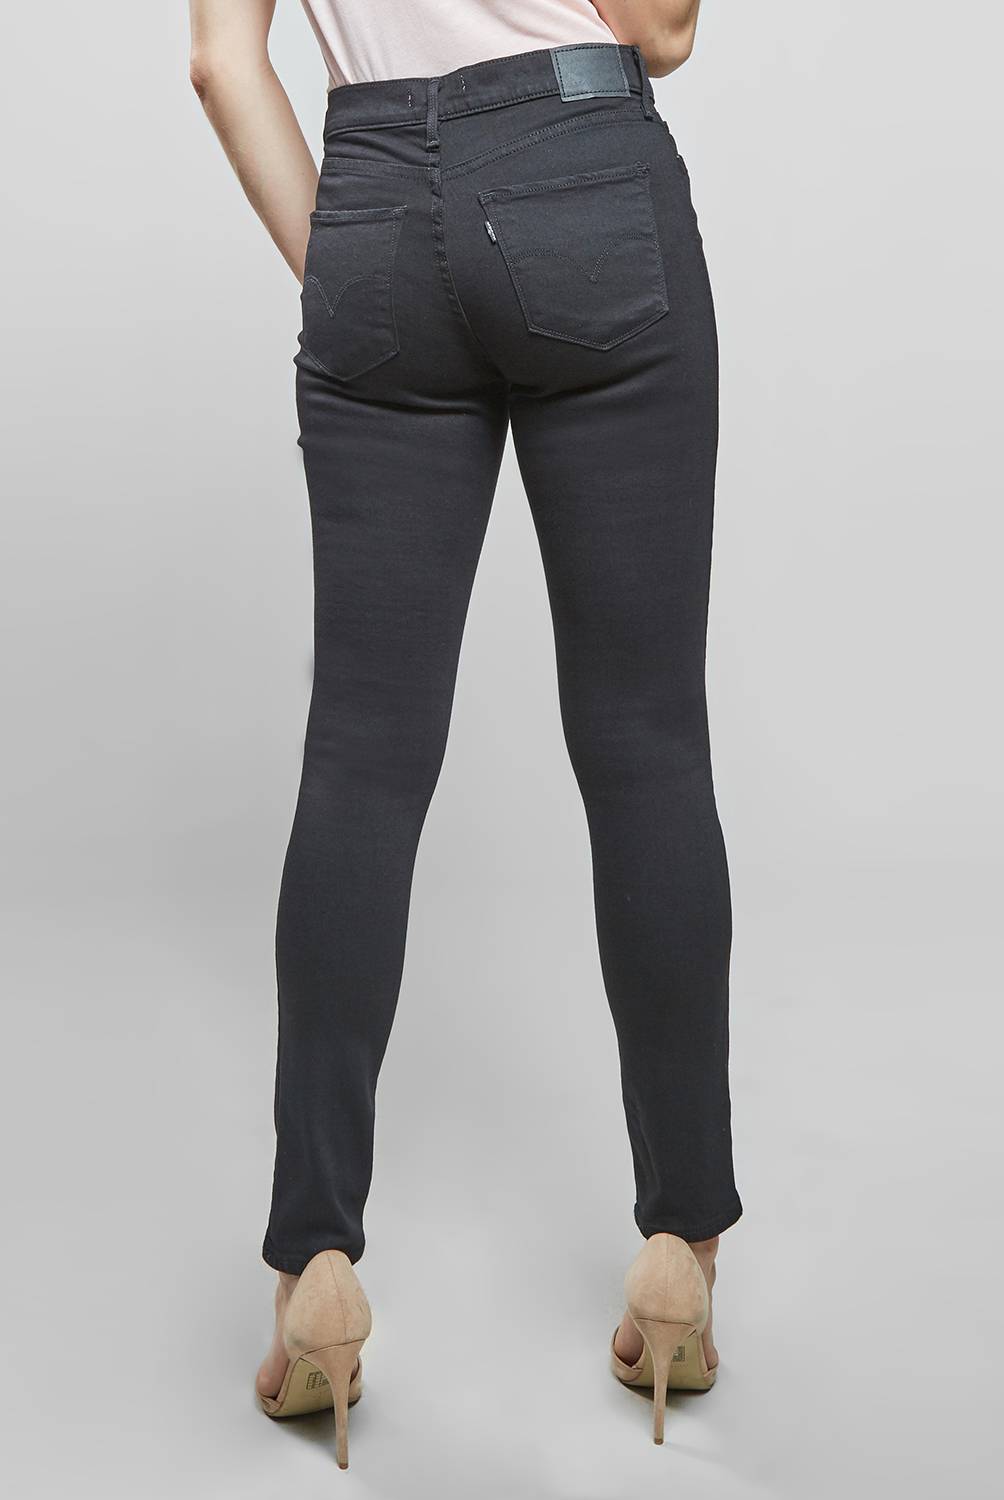 LEVIS - Jeans Skinny Tiro Medio Mujer